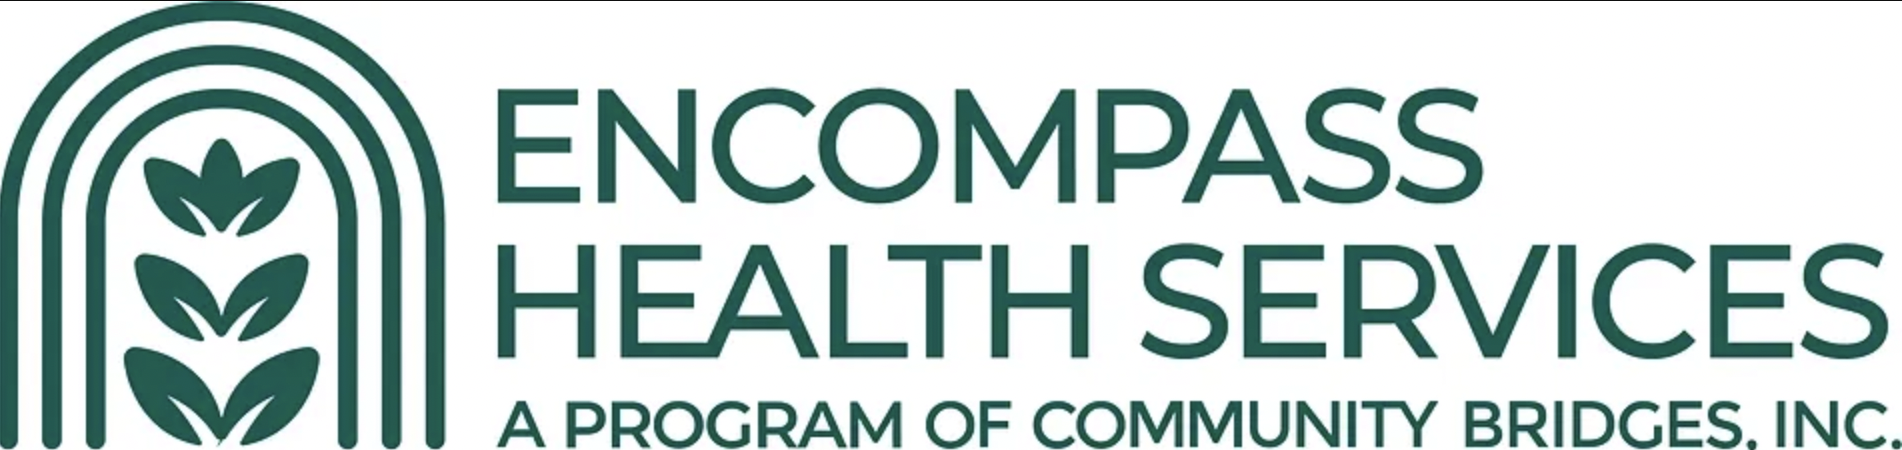 Encompass Health Services - Page Outpatient logo